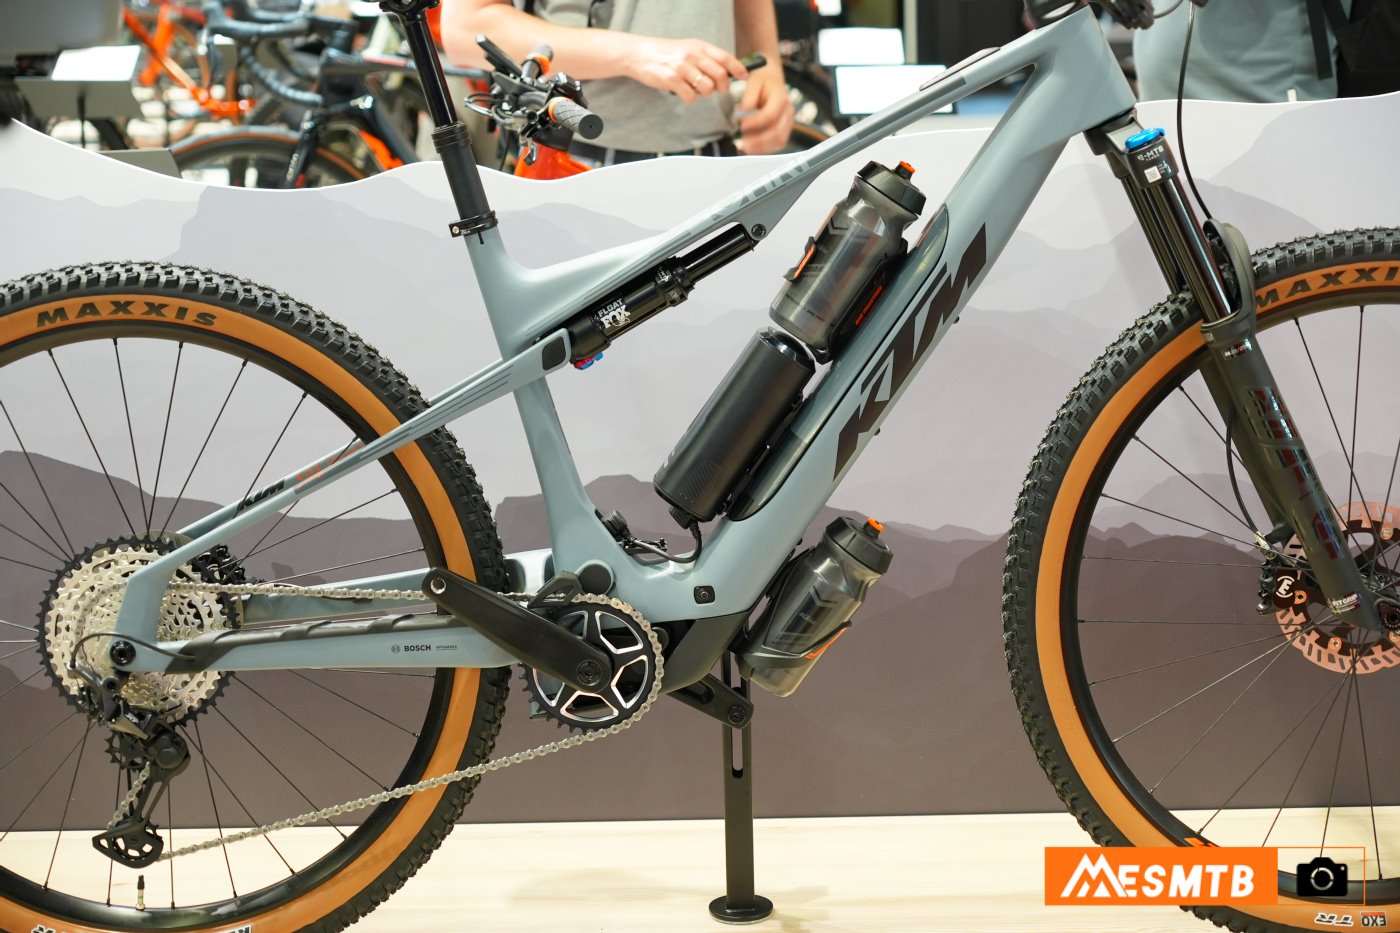 KTM Bicicleta Eléctrica Infantil SX-E 1.12 naranja - Sportpasión Cycling